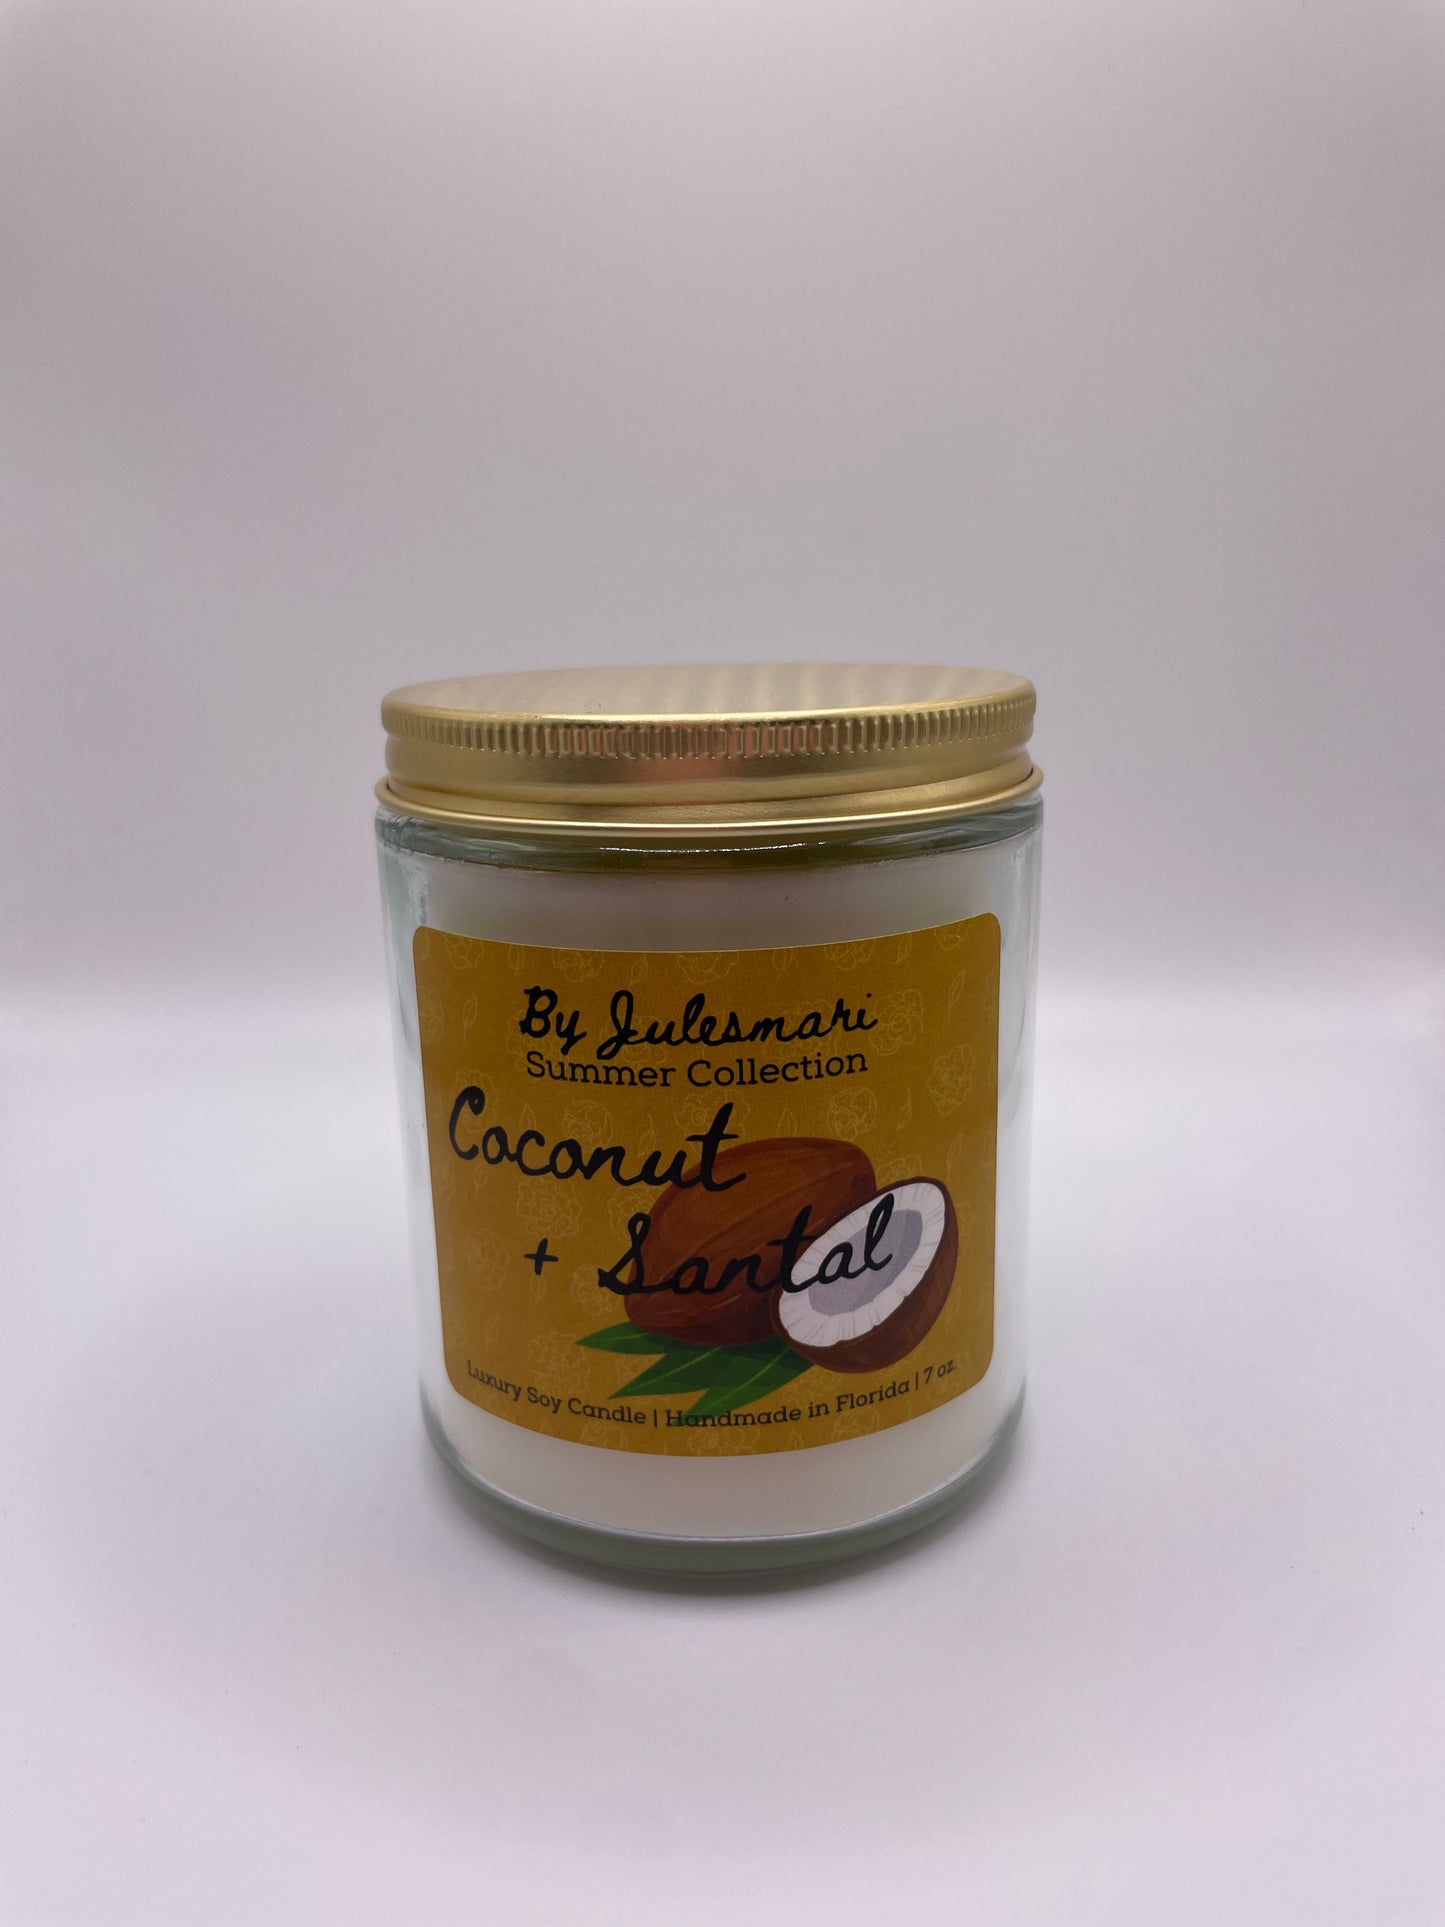 Coconut + Santal Candle